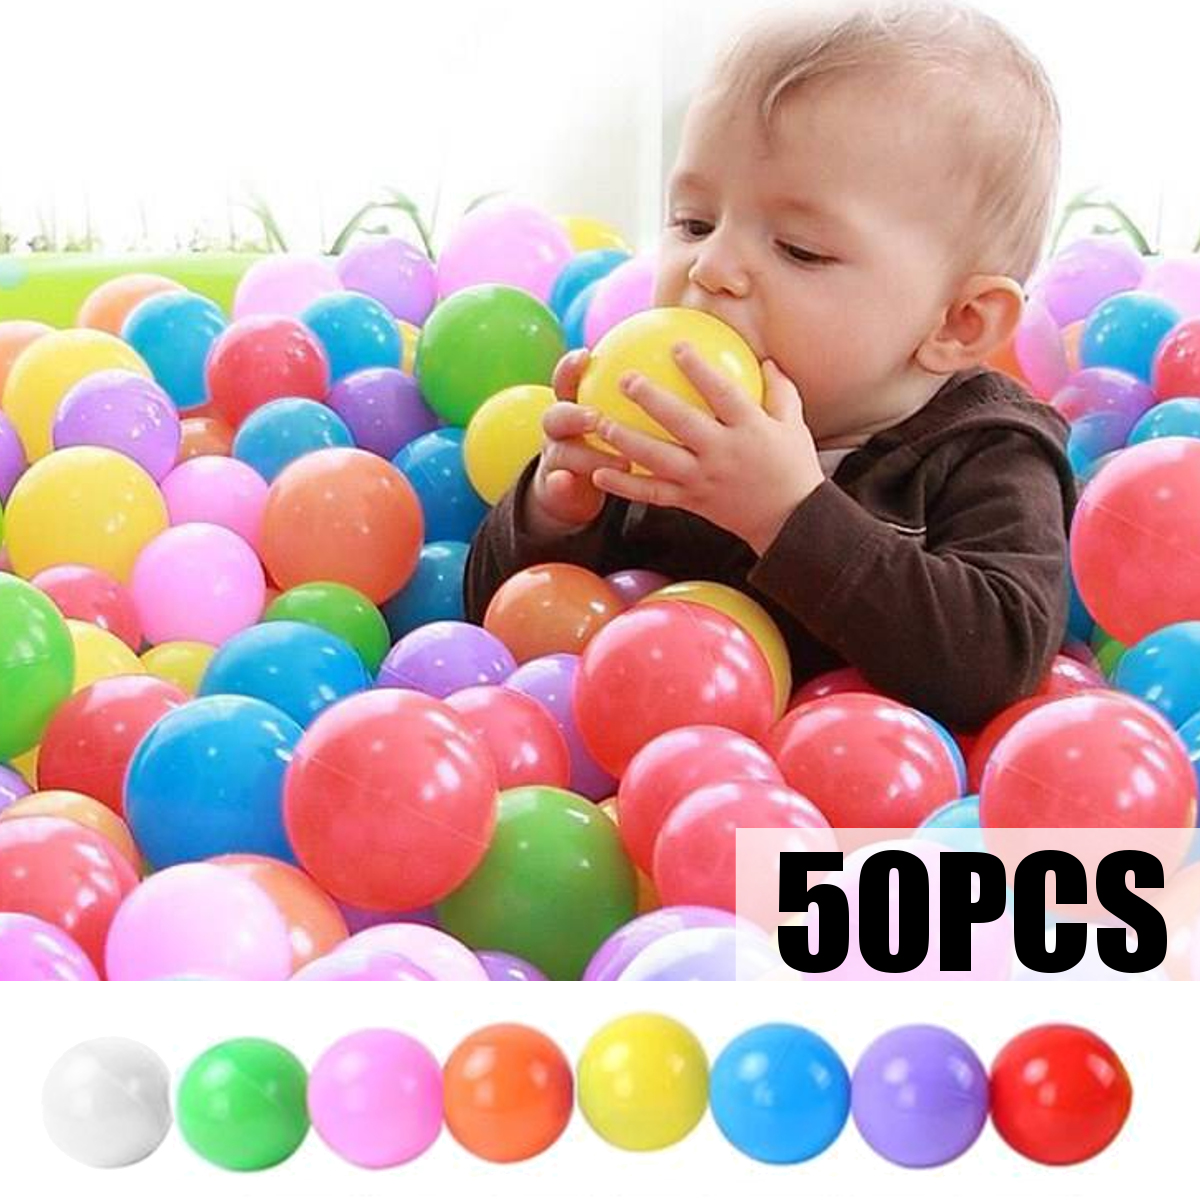 50pcs-Ocean-Ball-Toy-55cm-Soft-Plastic-Pit-Ball-Pool-Ball-Developmental-Toys-1403255-1